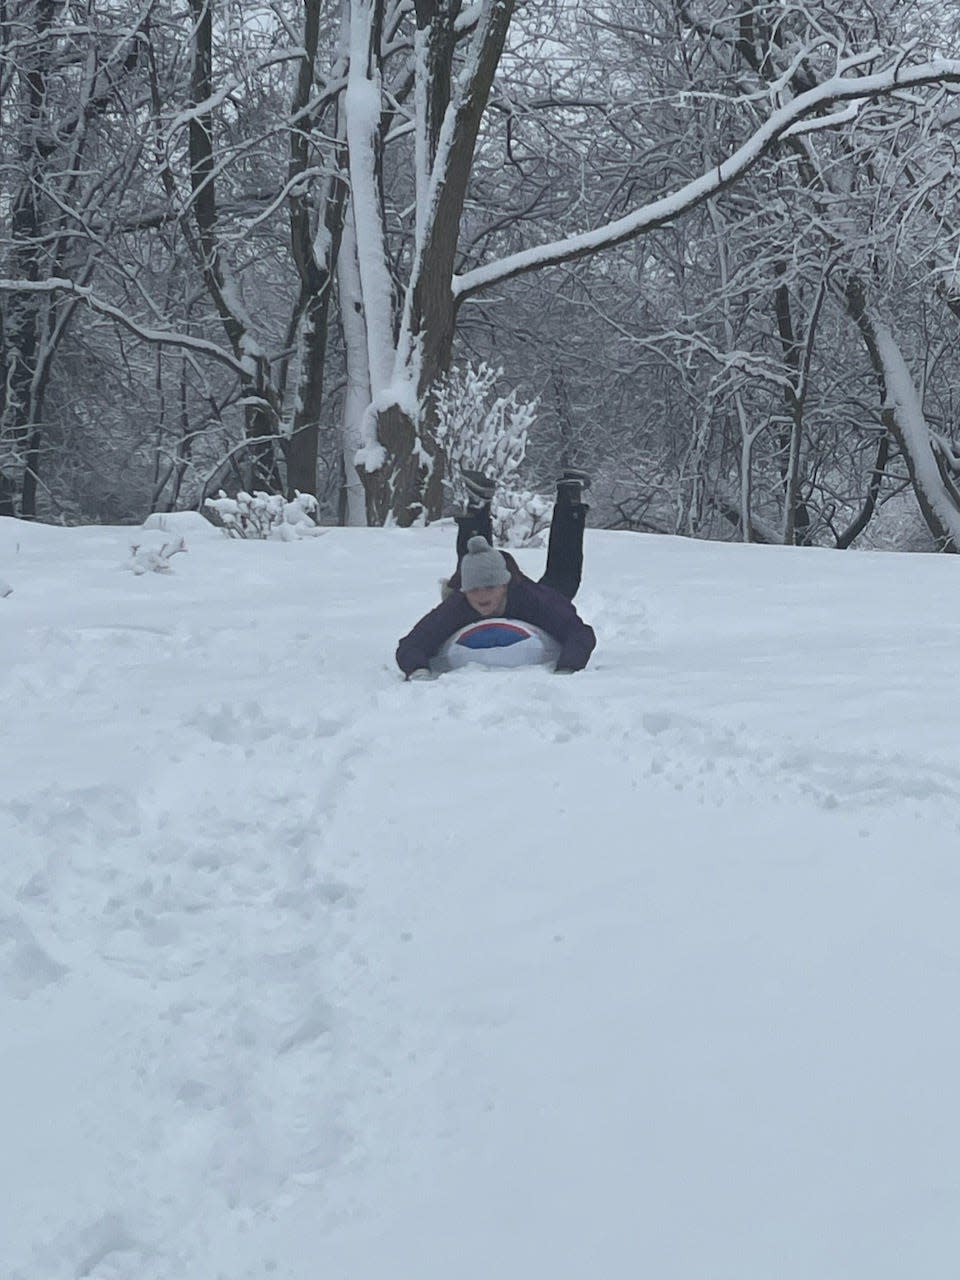 Harper Walters, 10, of Lincoln Park, sledding down a hill.